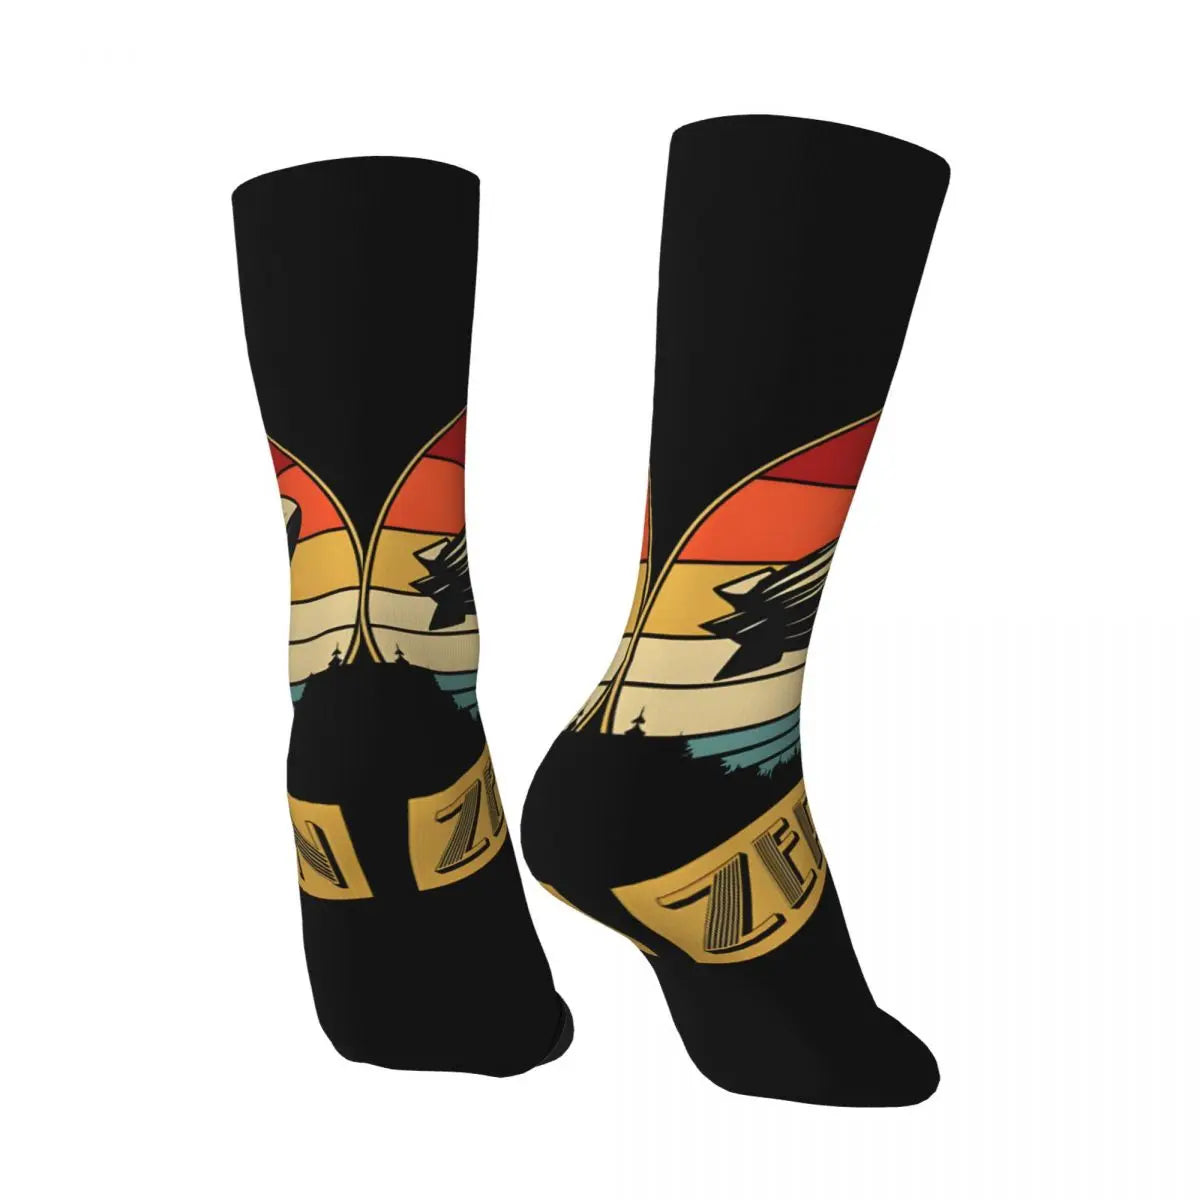 Vintage Cool Men's compression Socks Unisex Sleds Zeppelin Harajuku Pattern Printed Novelty Crew Sock - Premium socks from Lizard Vigilante - Just $14.99! Shop now at Lizard Vigilante